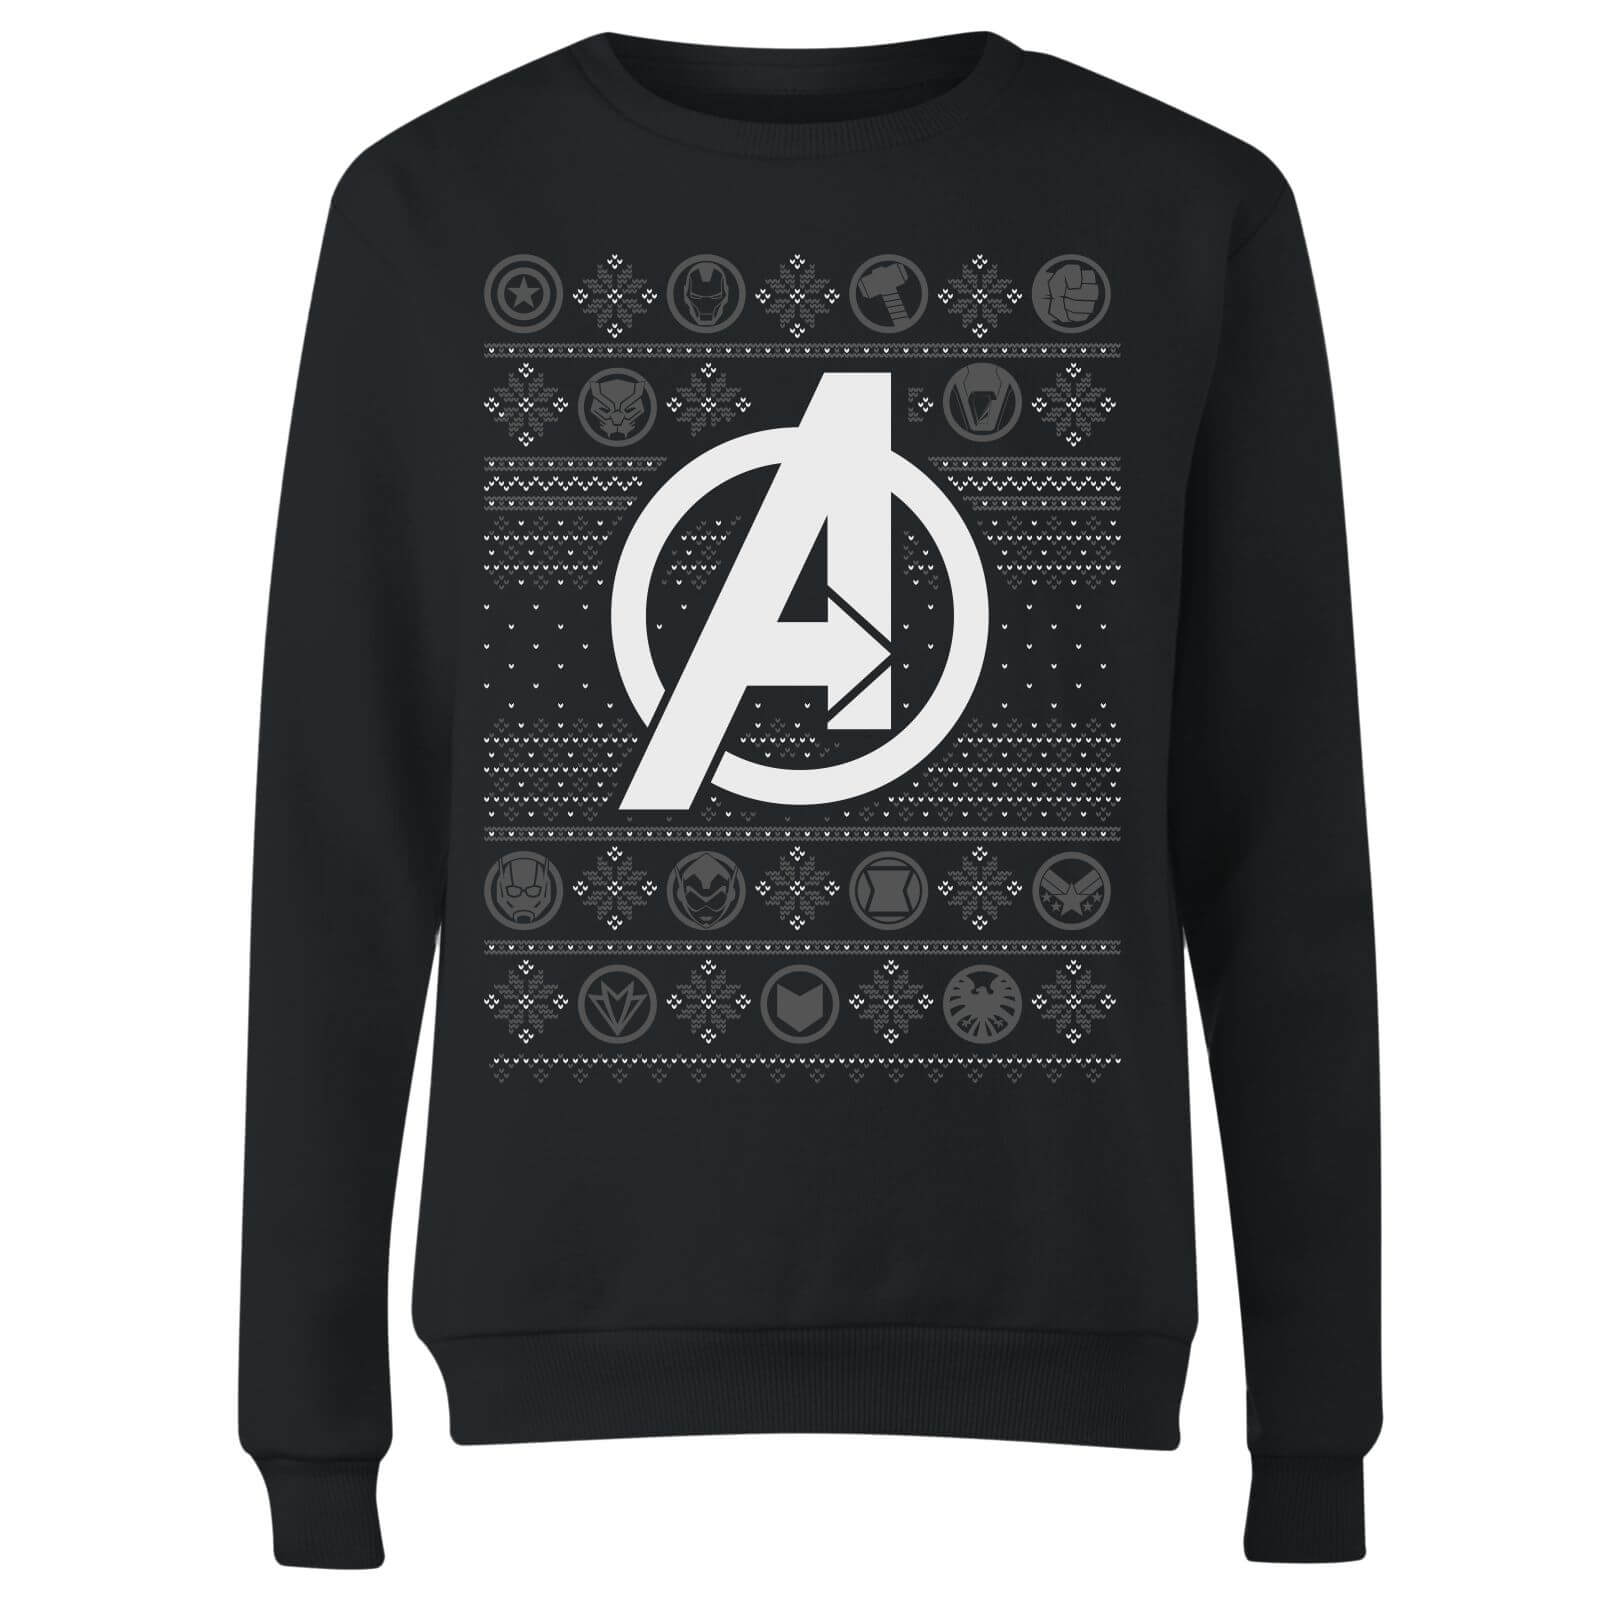 Marvel Avengers Logo Women's Christmas Sweatshirt - Black - L